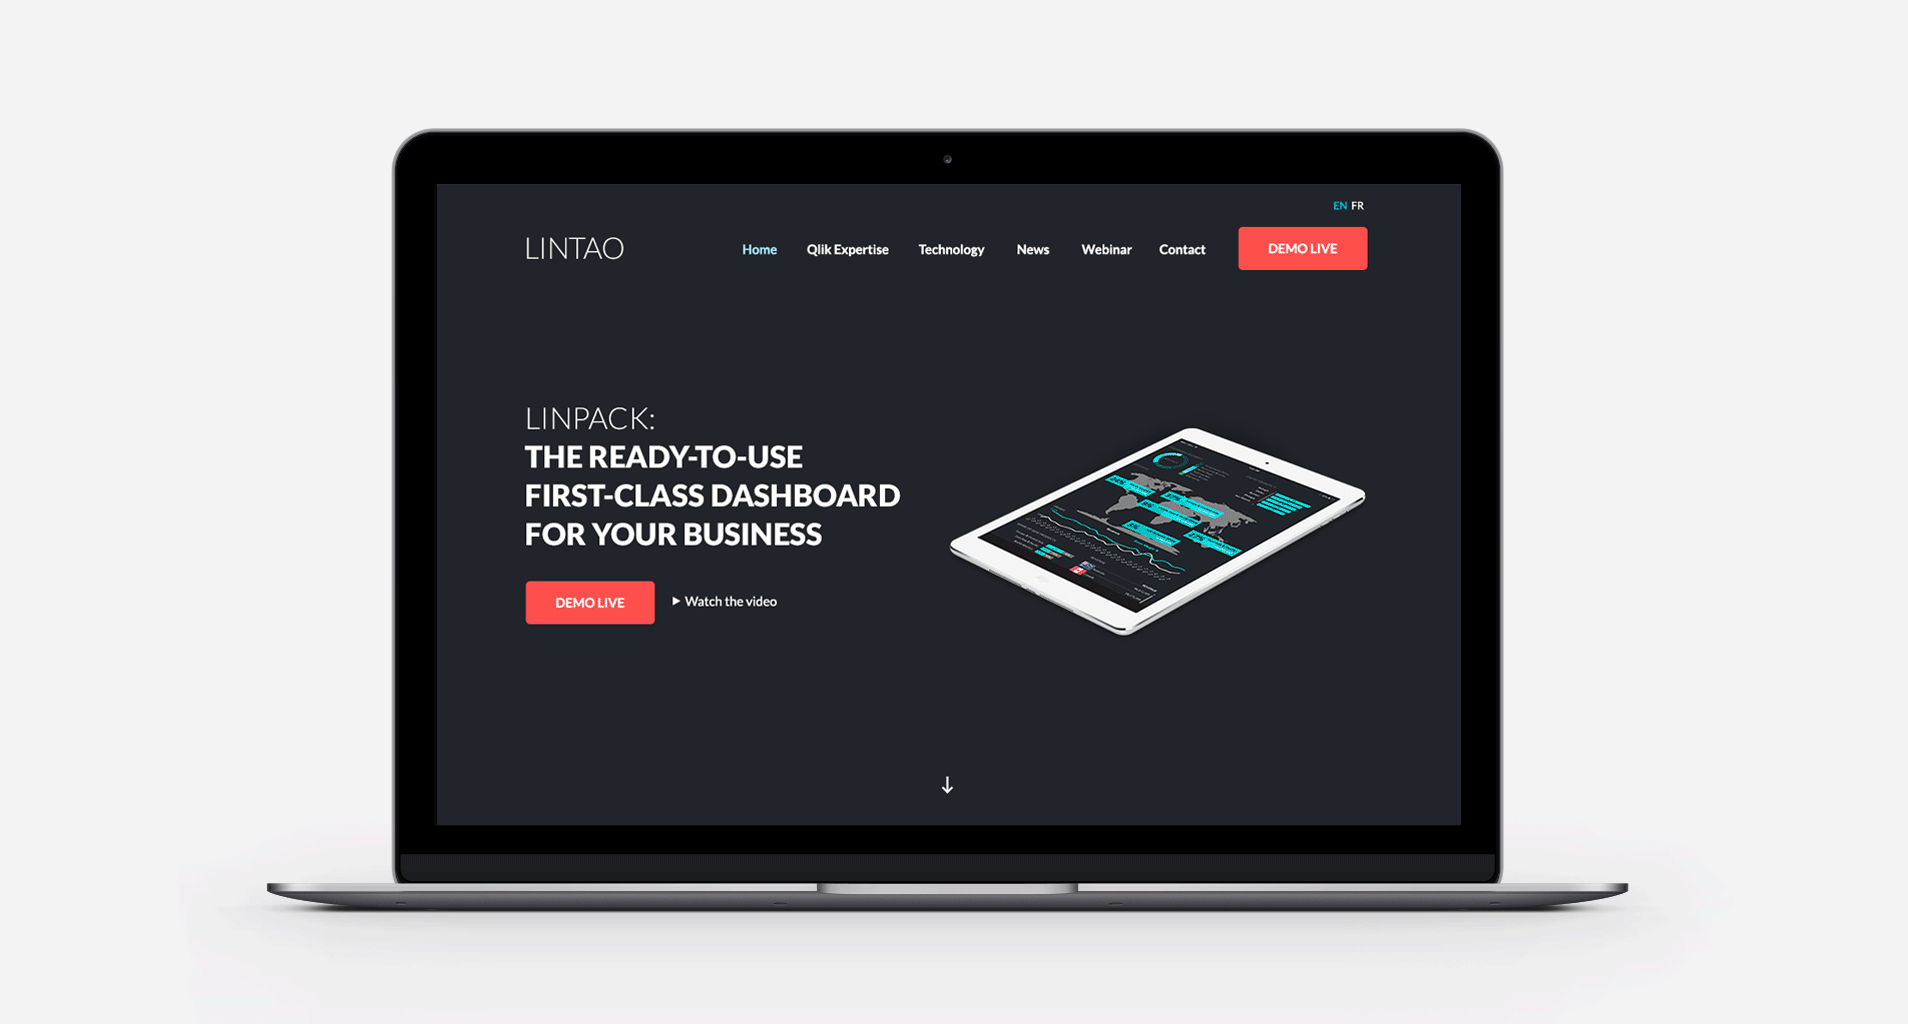 Display of Lintao's new website on laptop